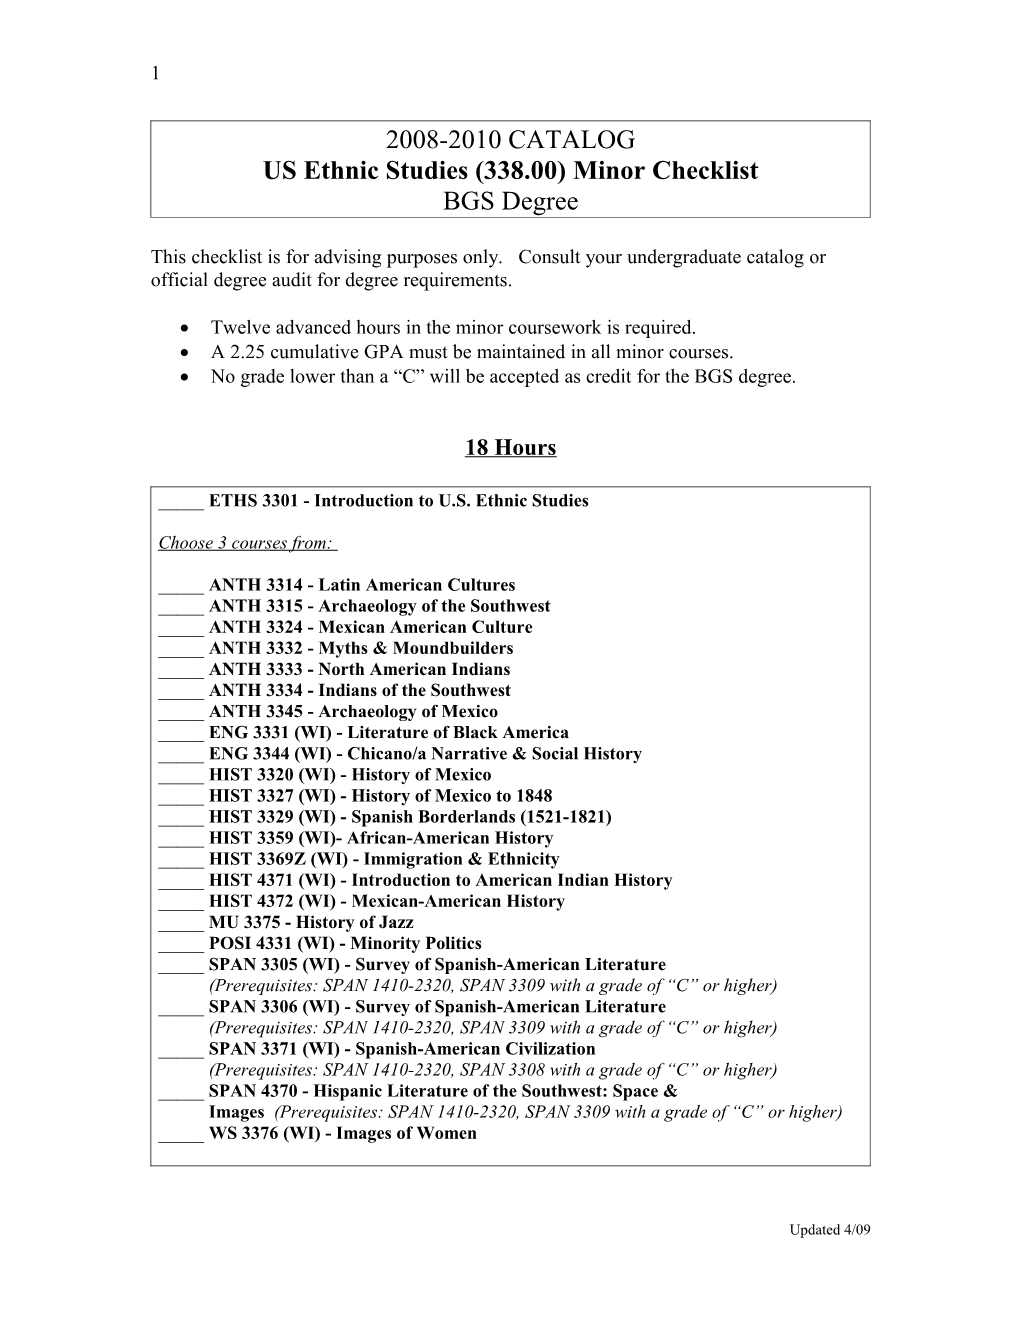 US Ethnic Studies (338.00) Minor Checklist